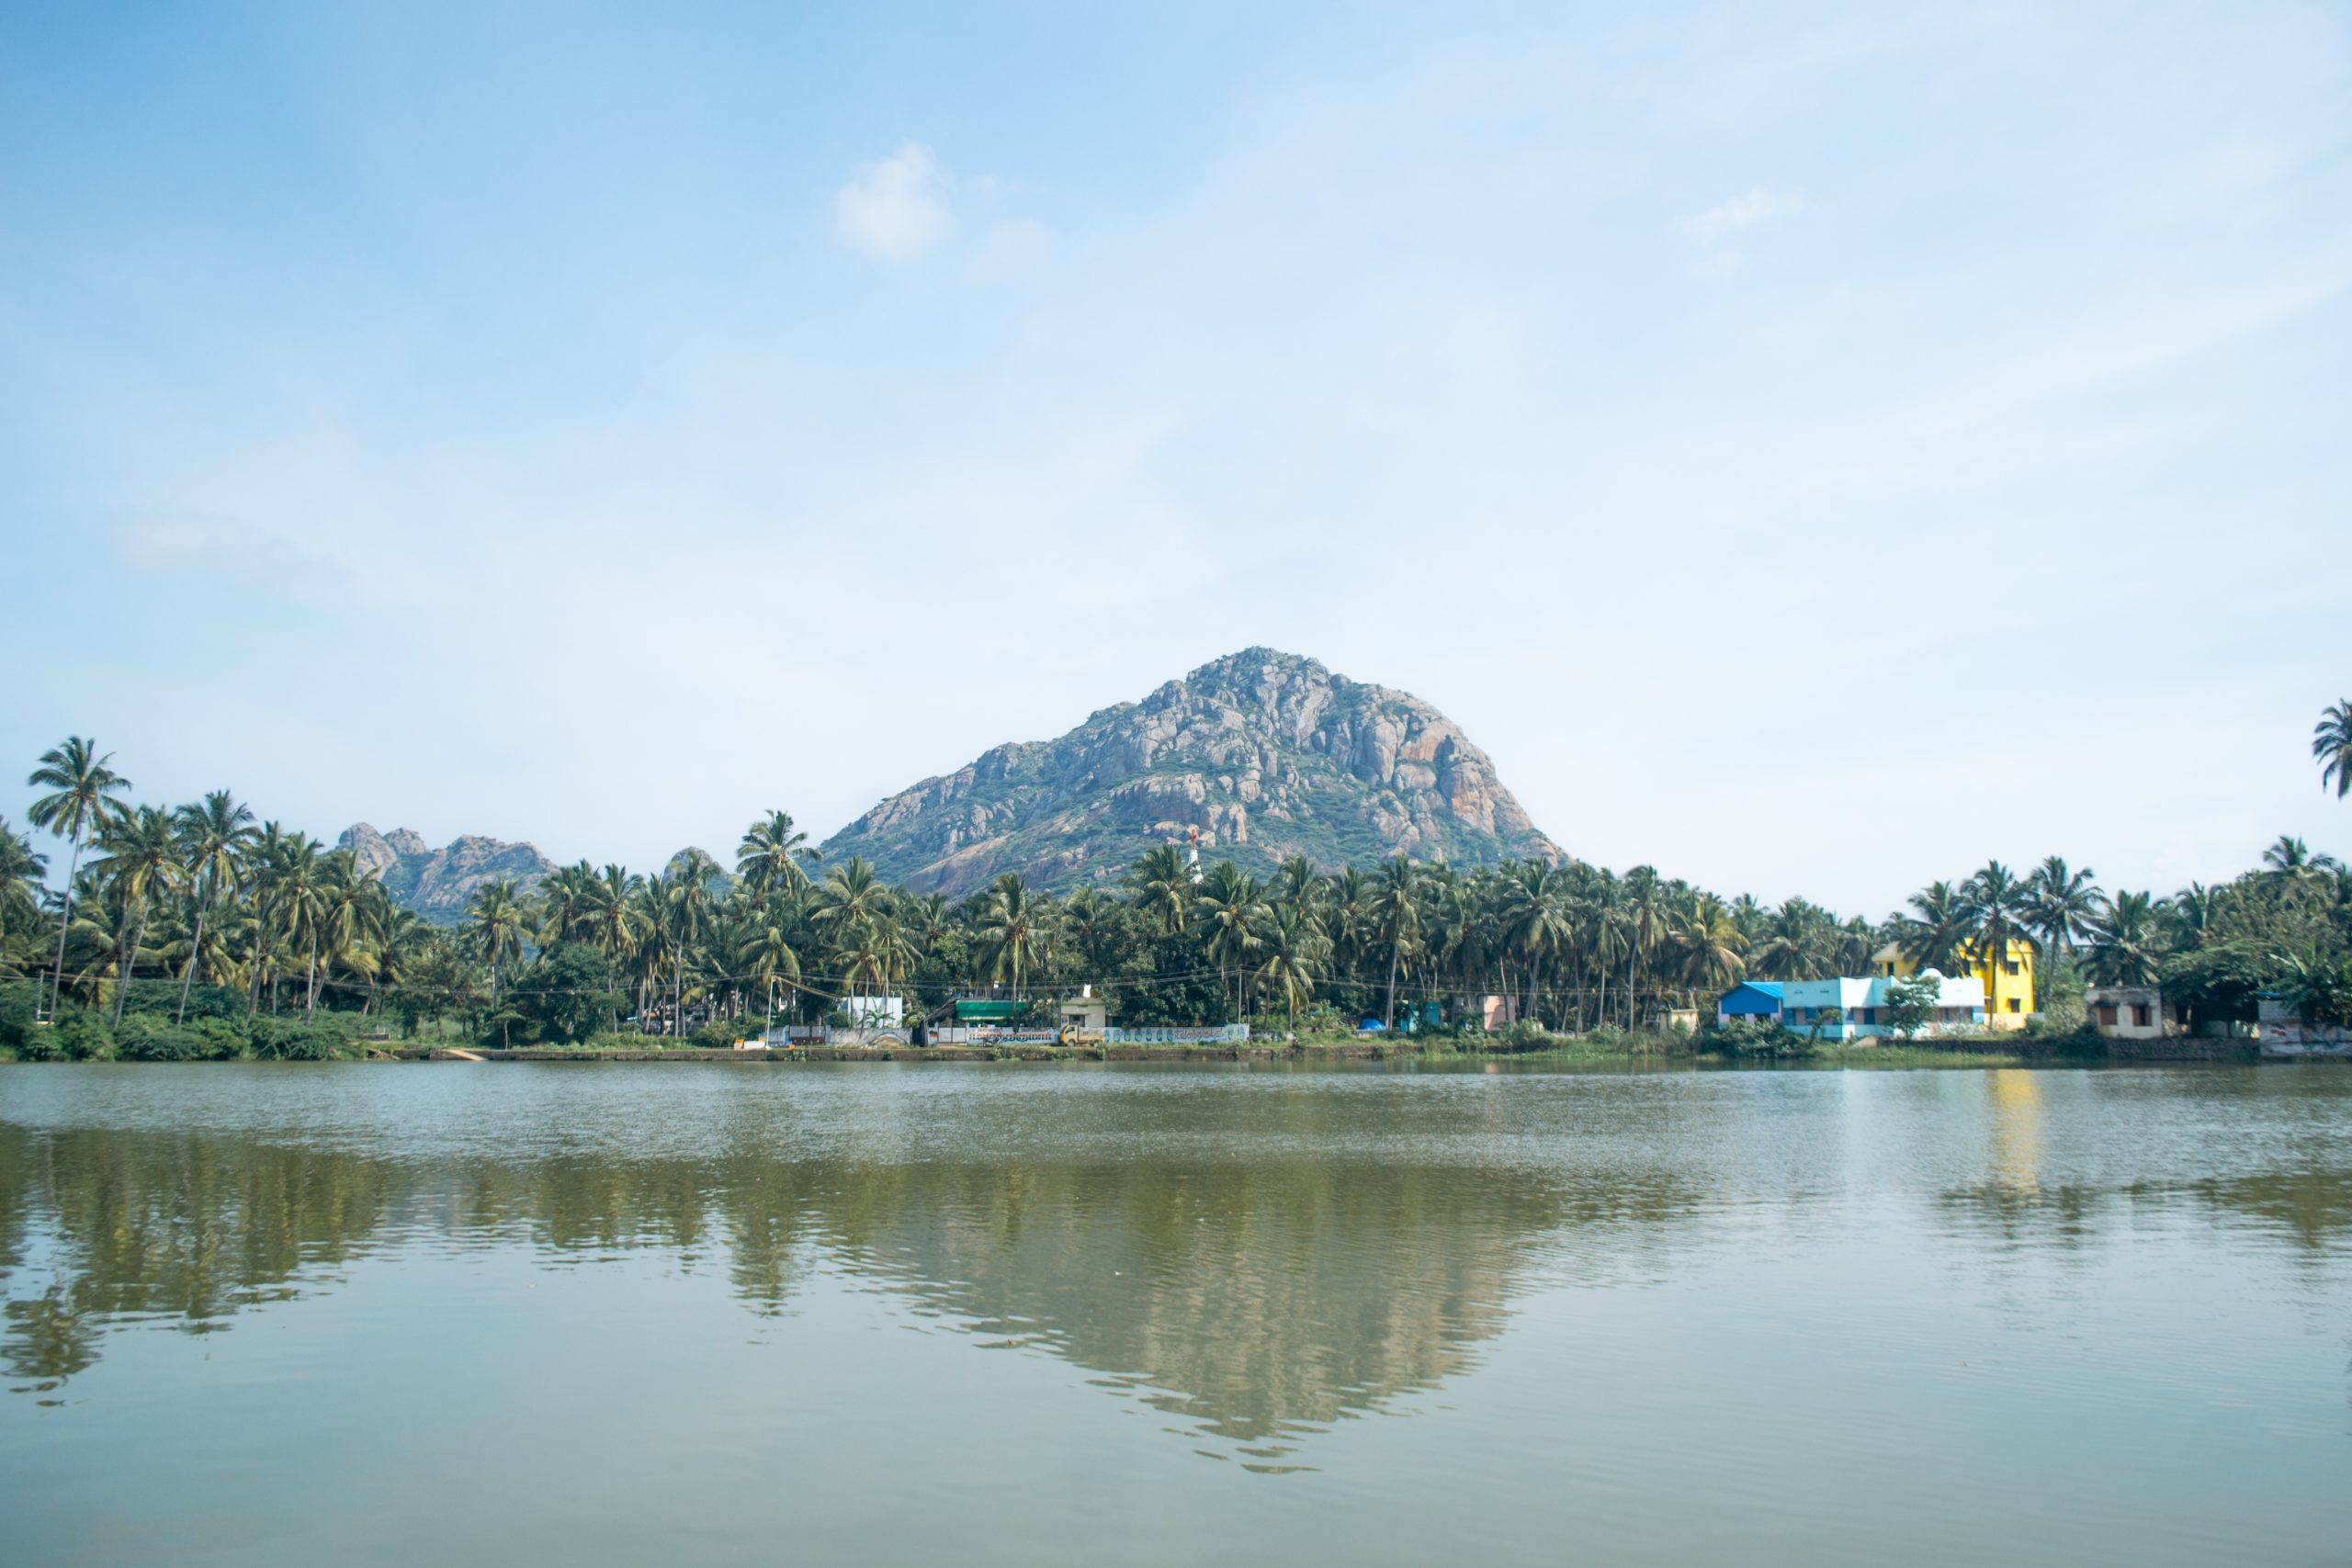 Outskirts of tamilnadu - PixaHive